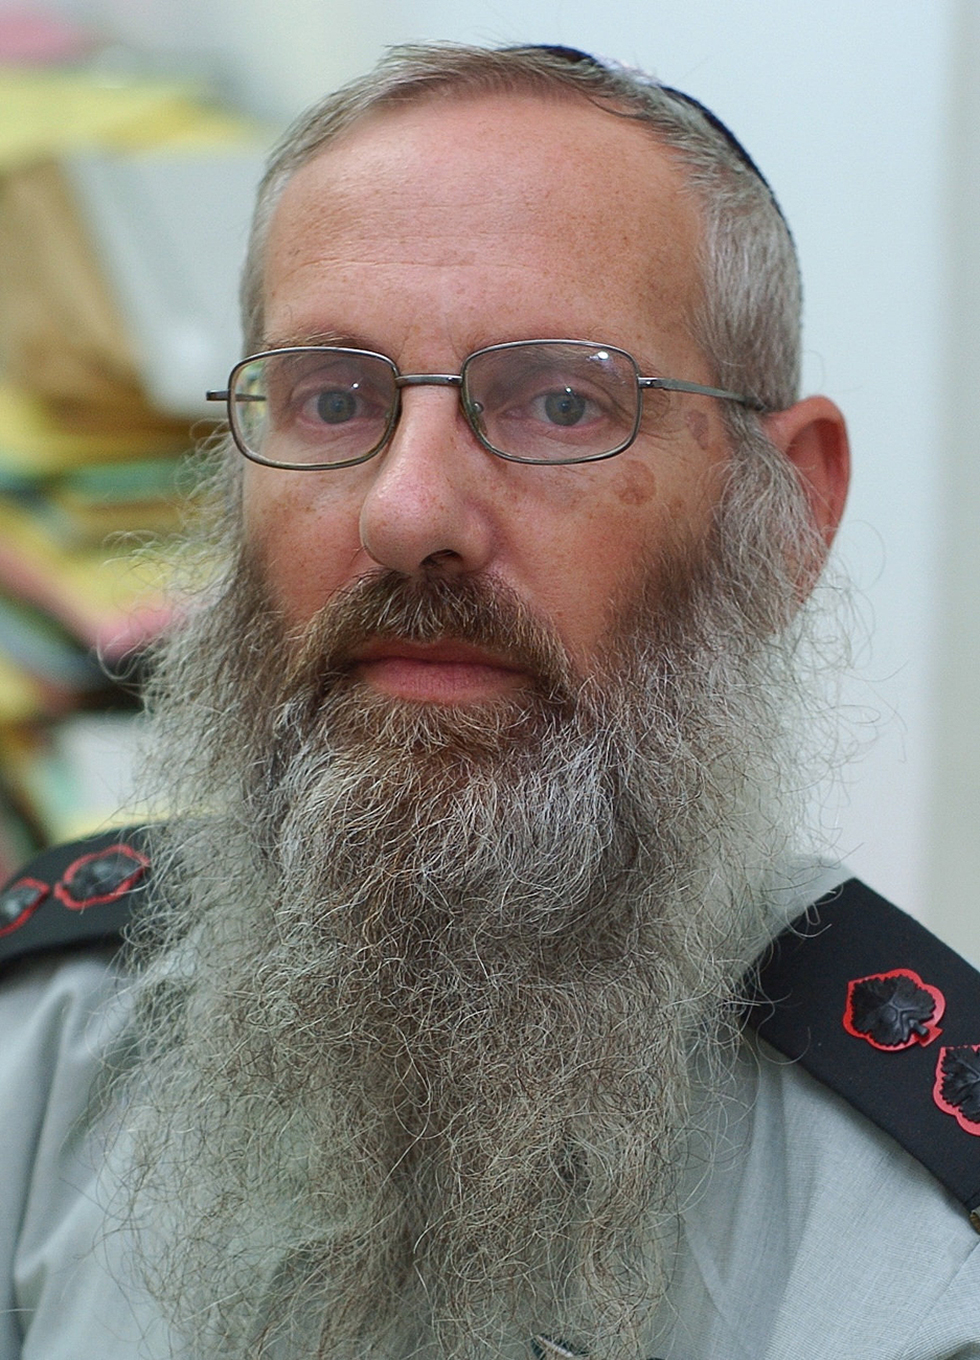 Incoming IDF chief rabbi Col. Eyal Karim (Photo: Bemahane, the IDF newspaper)